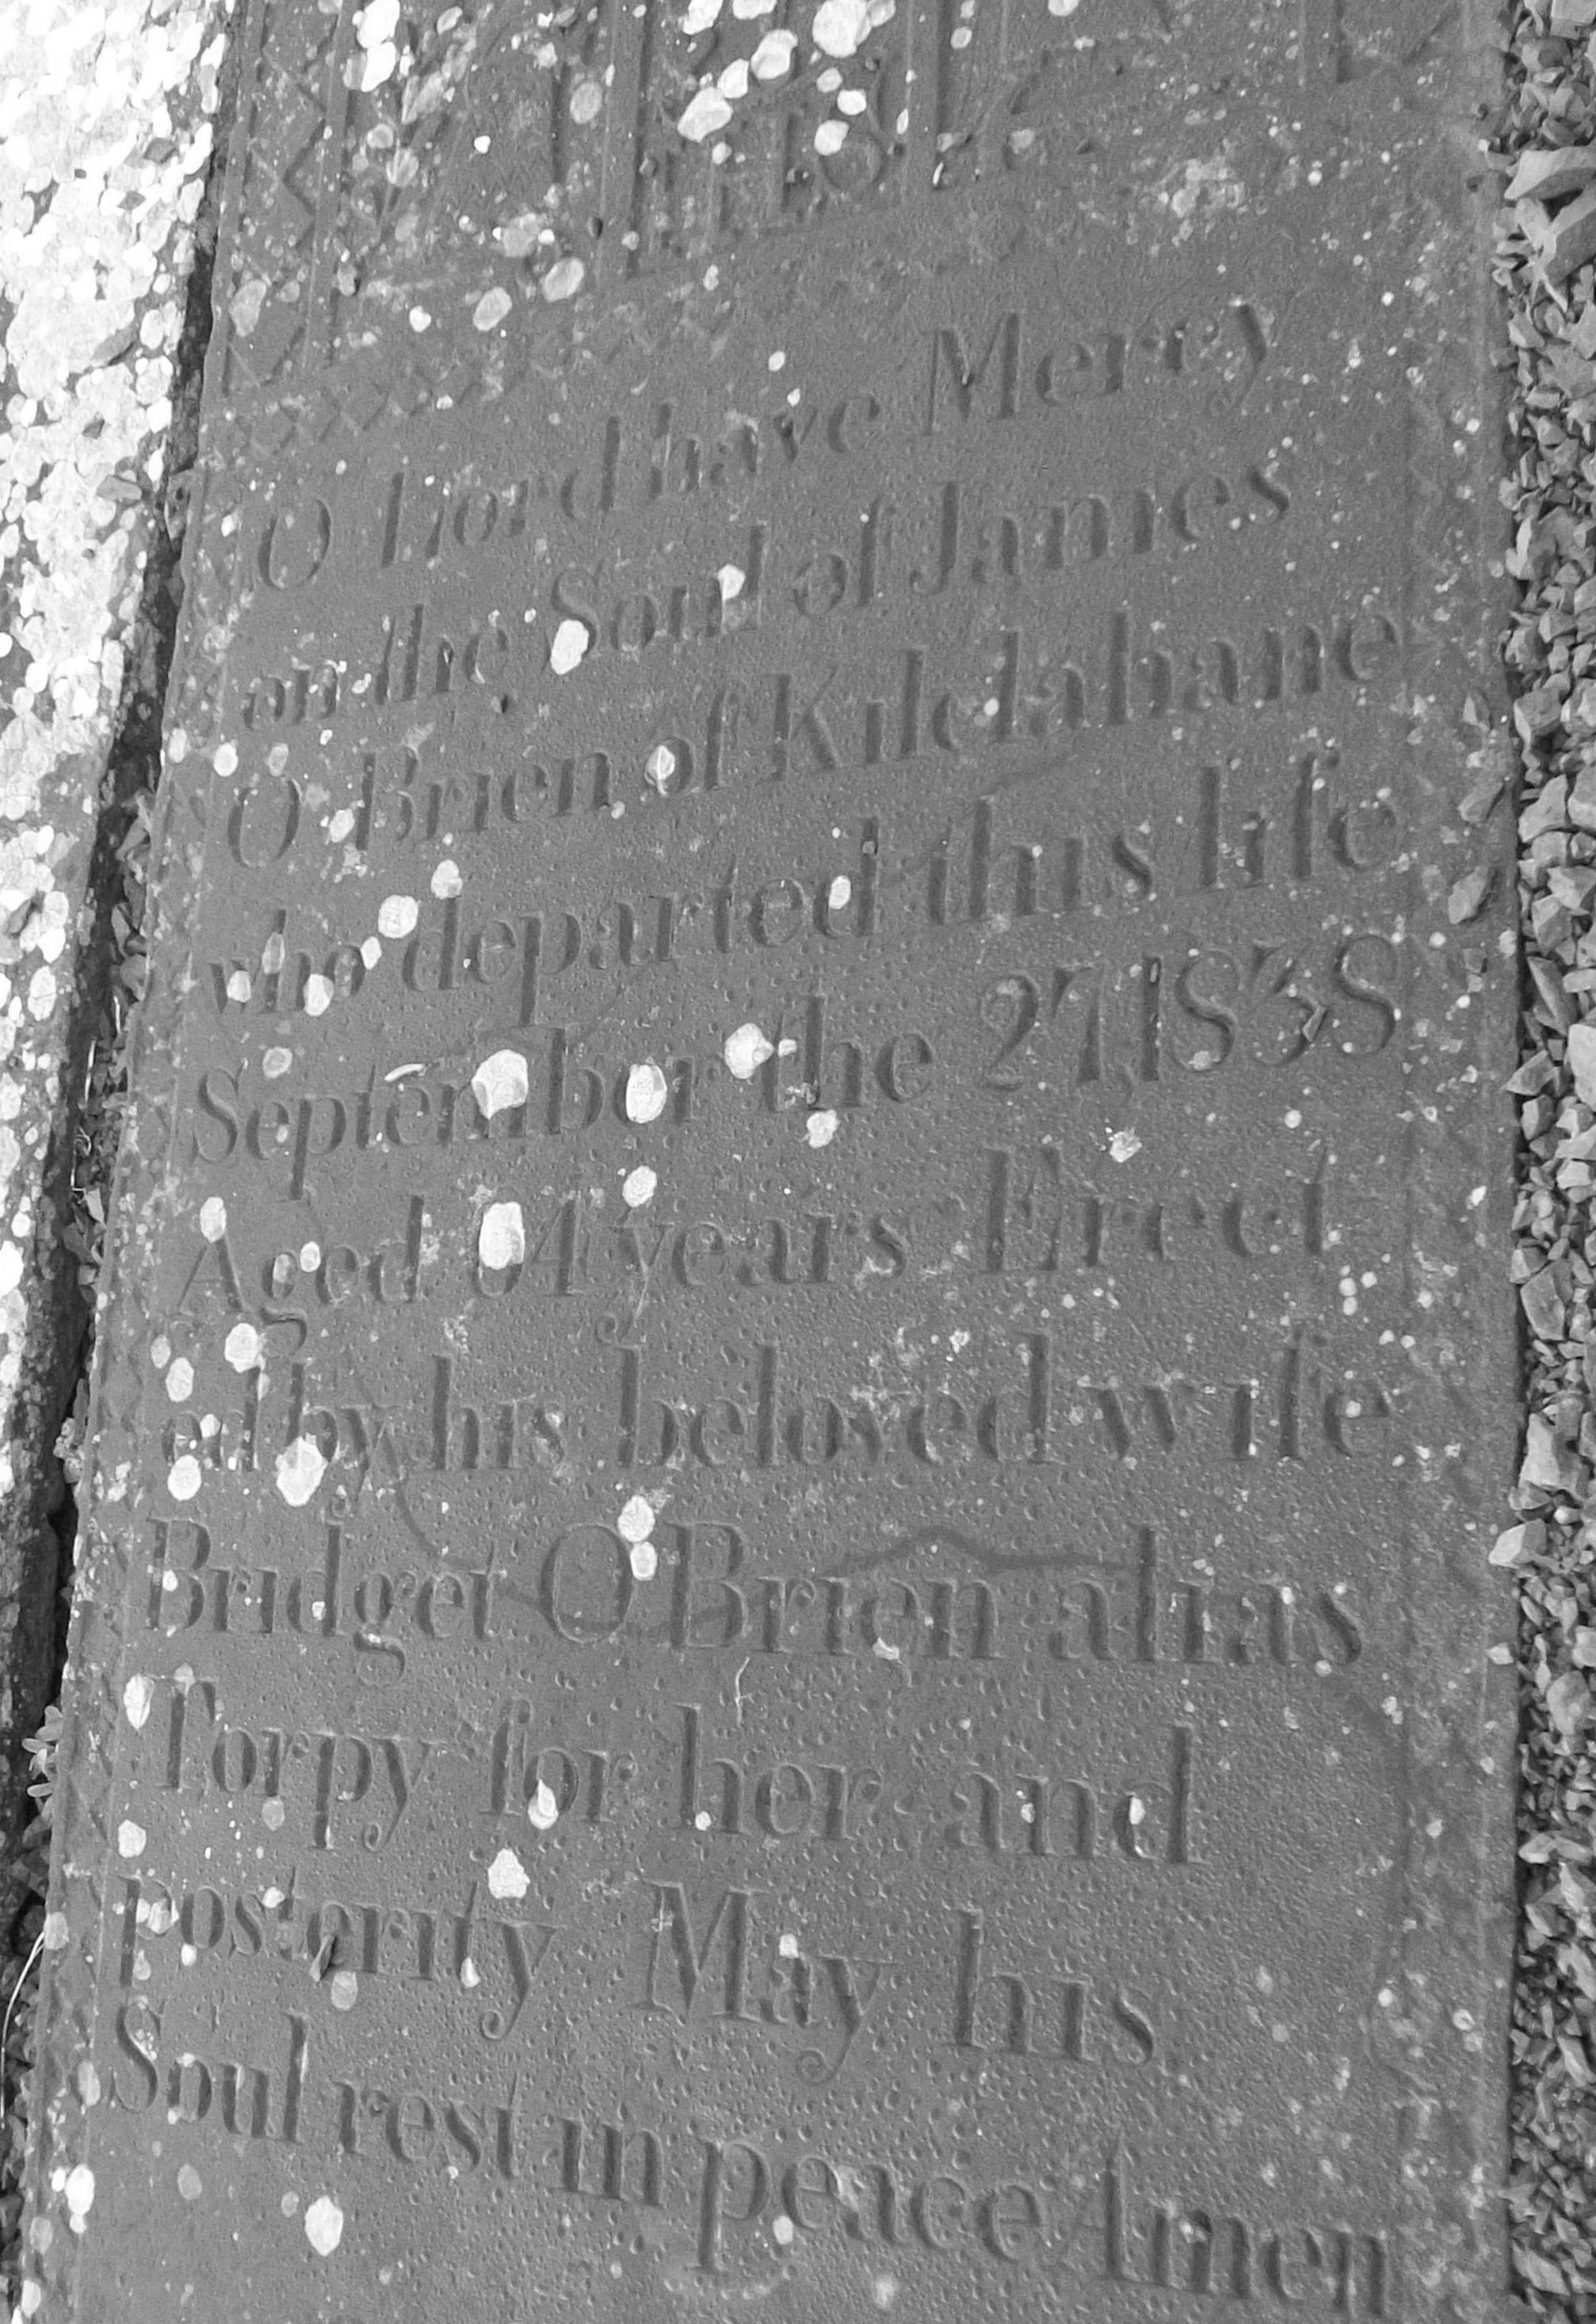 Kilbridget Graveyard O'Brien James b.jpg